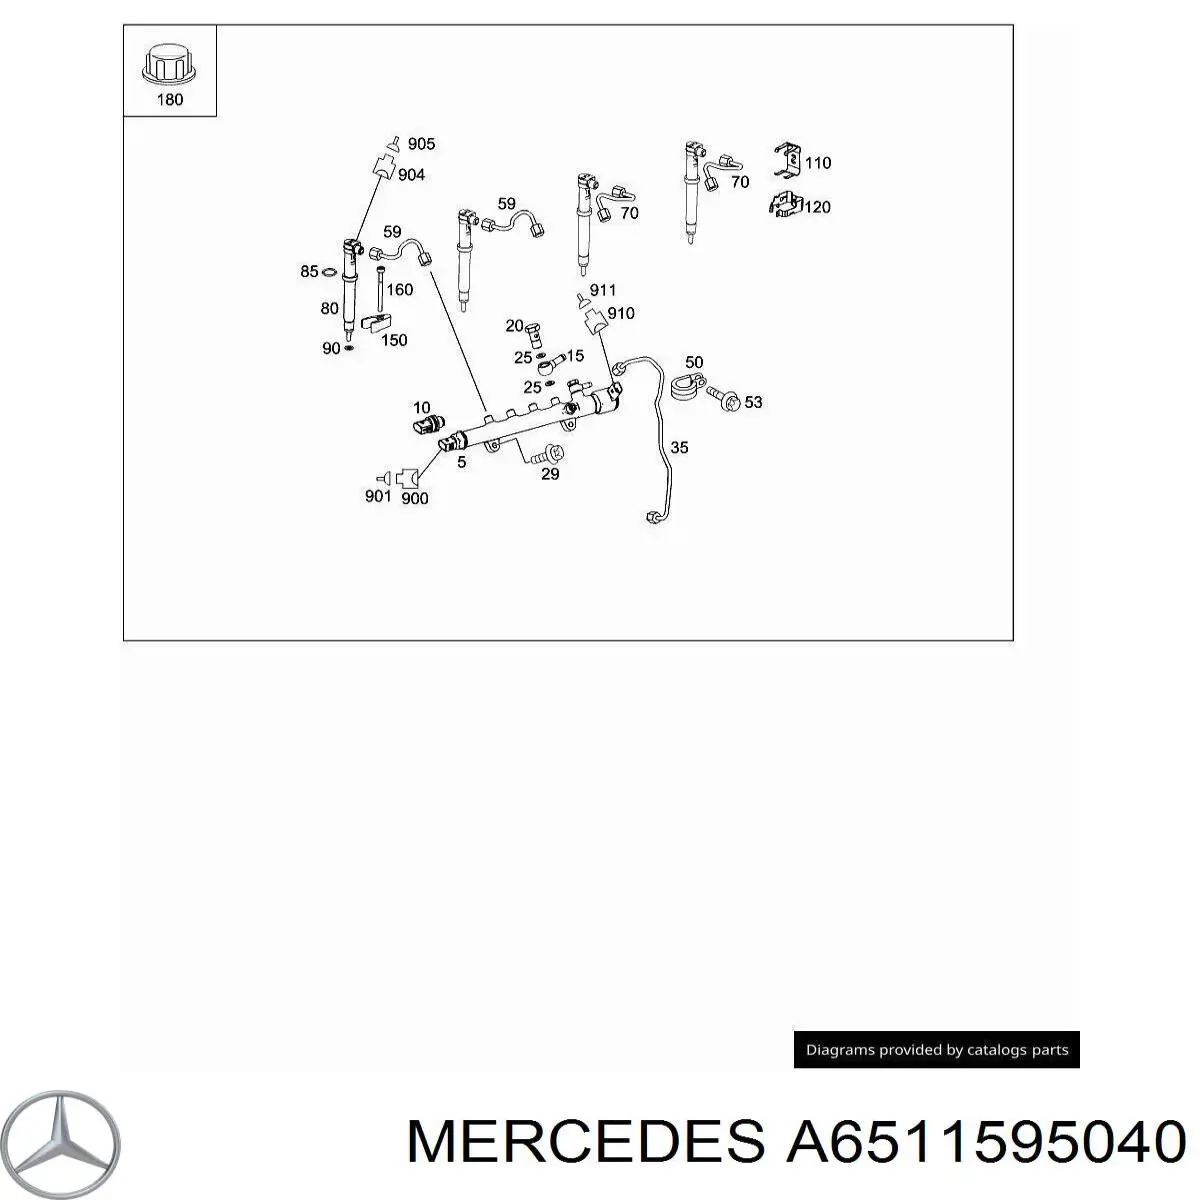 A6511595040 Mercedes